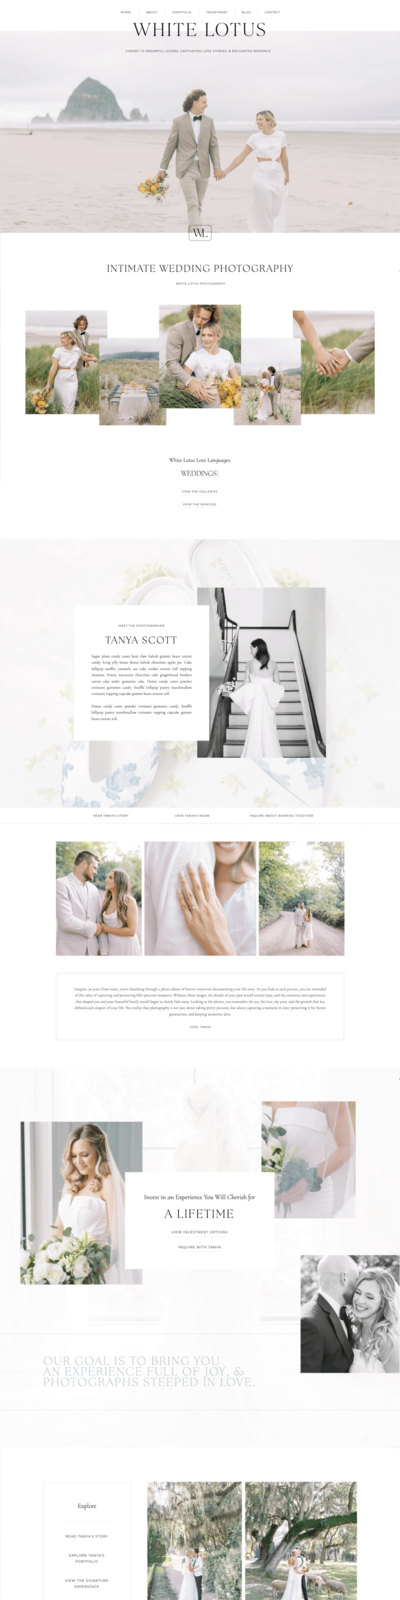 White Lotus website template